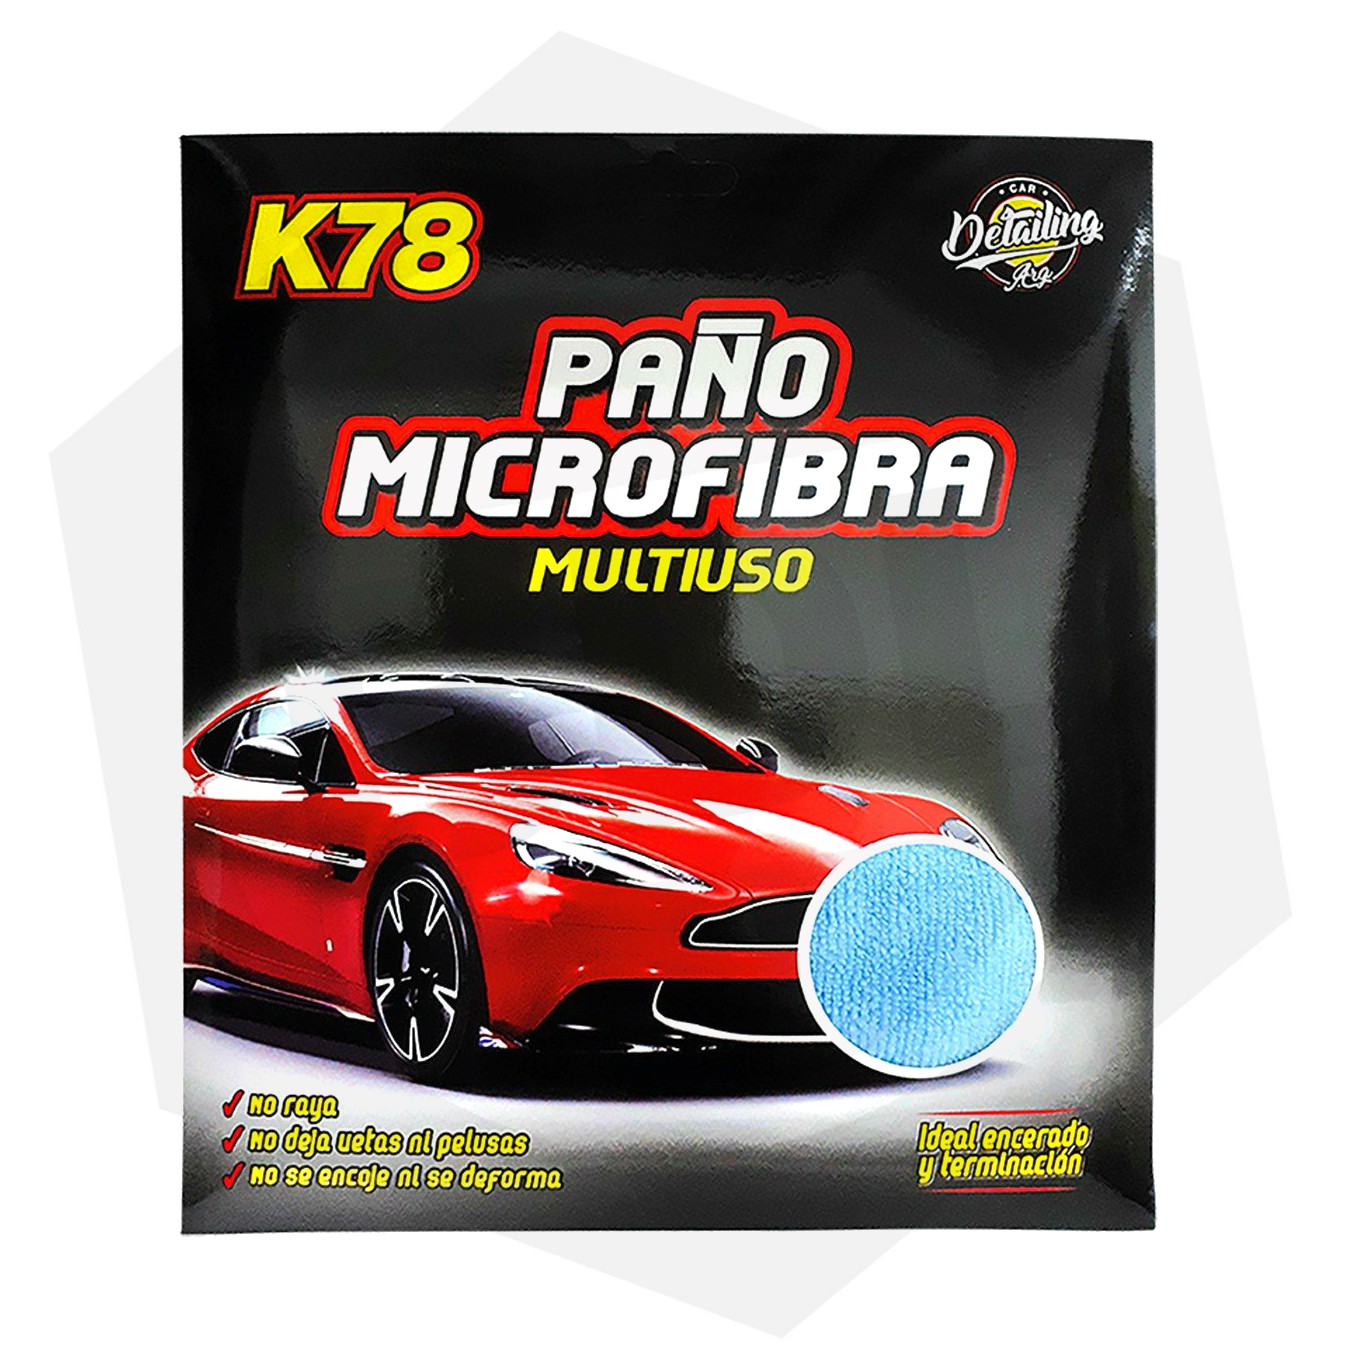 Paño de Microfibra Multiuso K78 601 - 40 X 40 CM